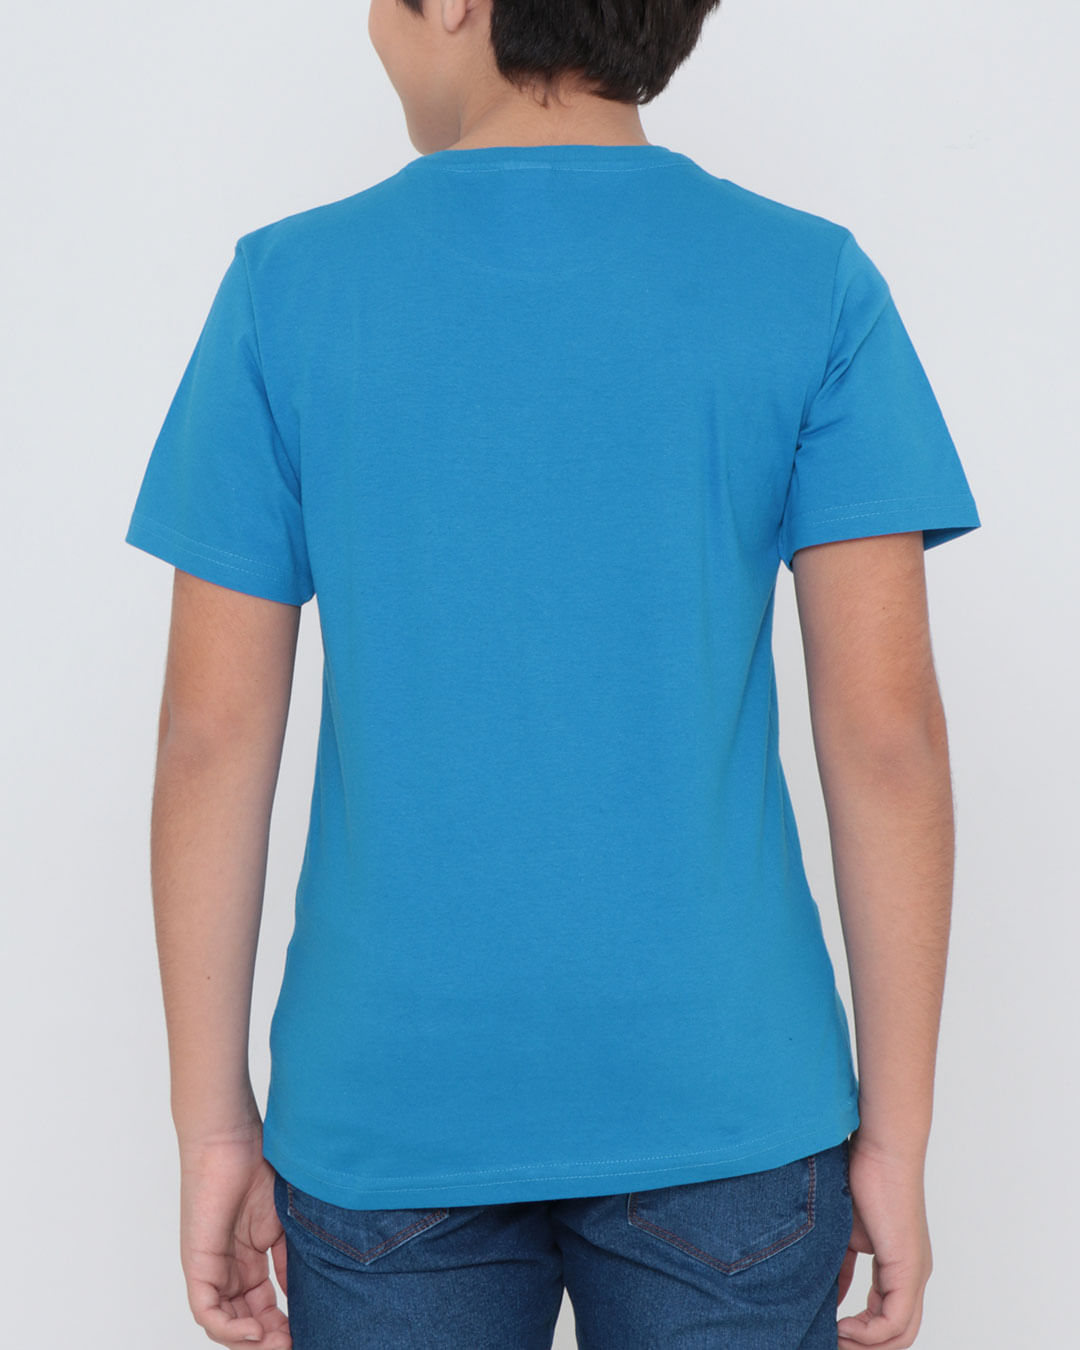 Camiseta-Infantil-Estampa-Gamer-Manga-Curta-Azul